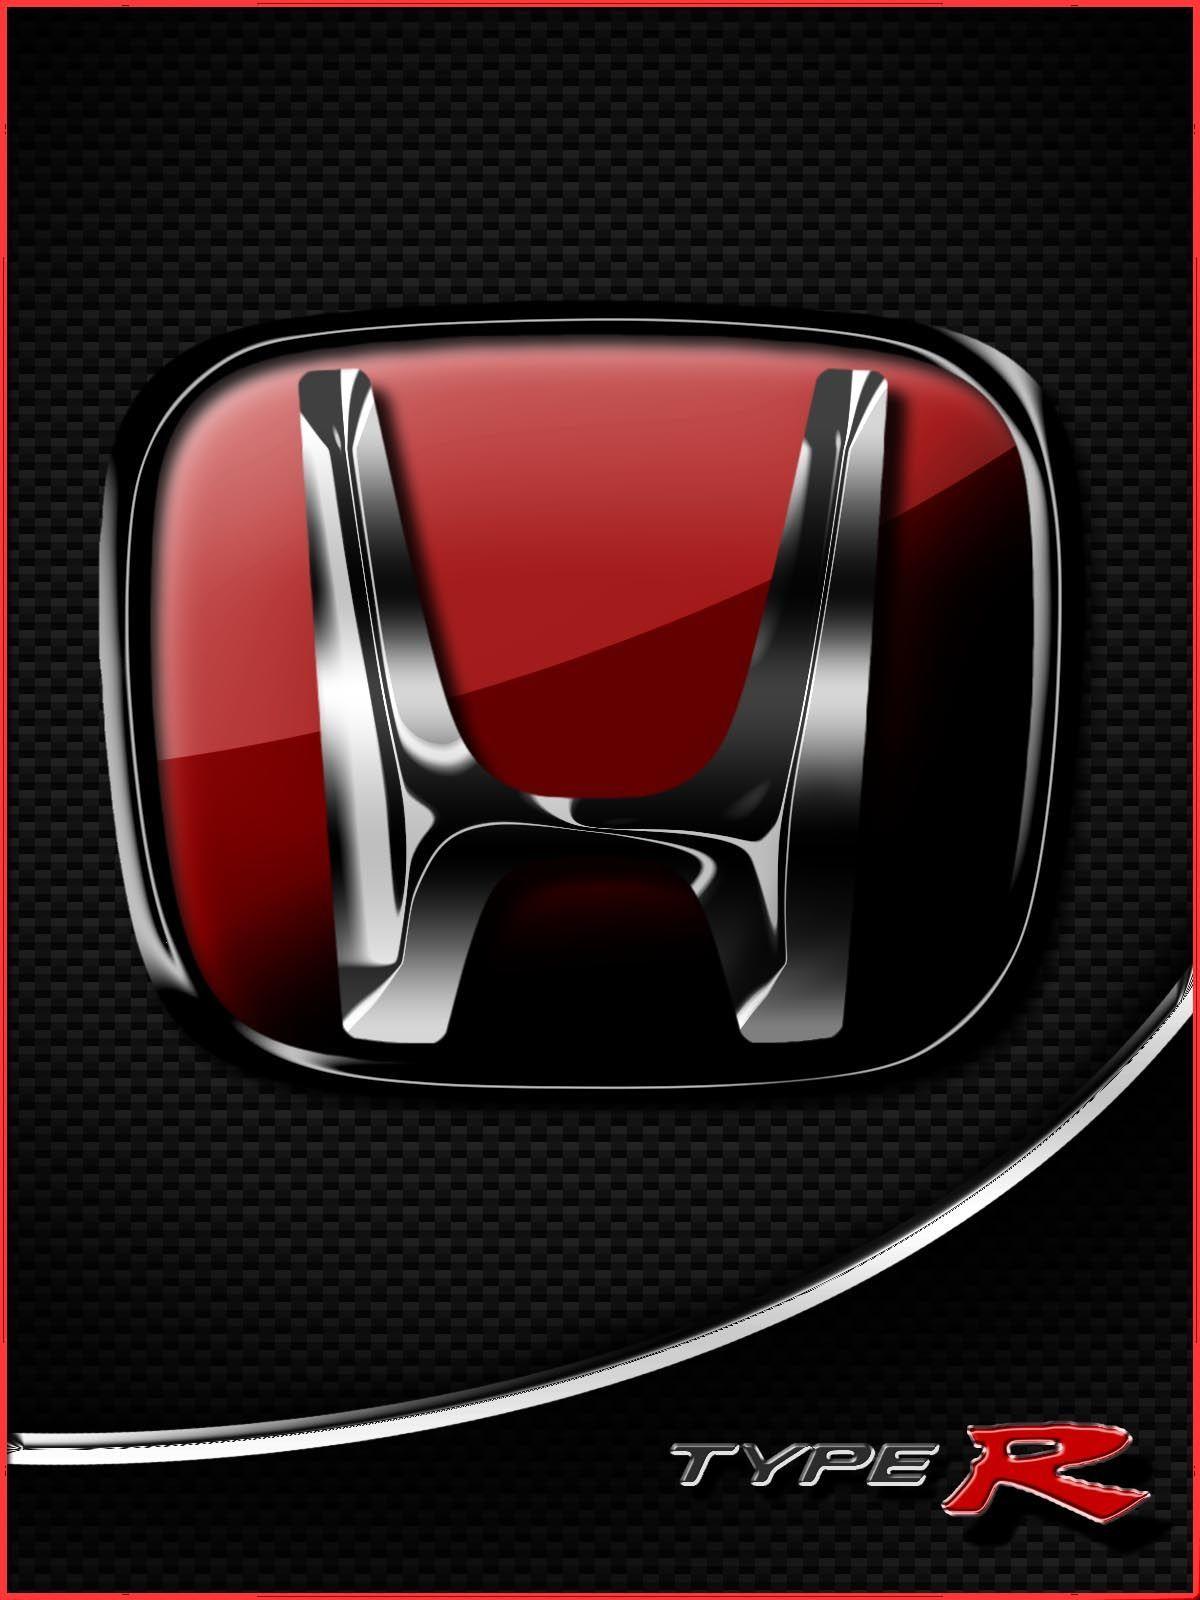 Cool Honda Logo - Honda Logo 14 | Cool cars | Cb 300, Carros